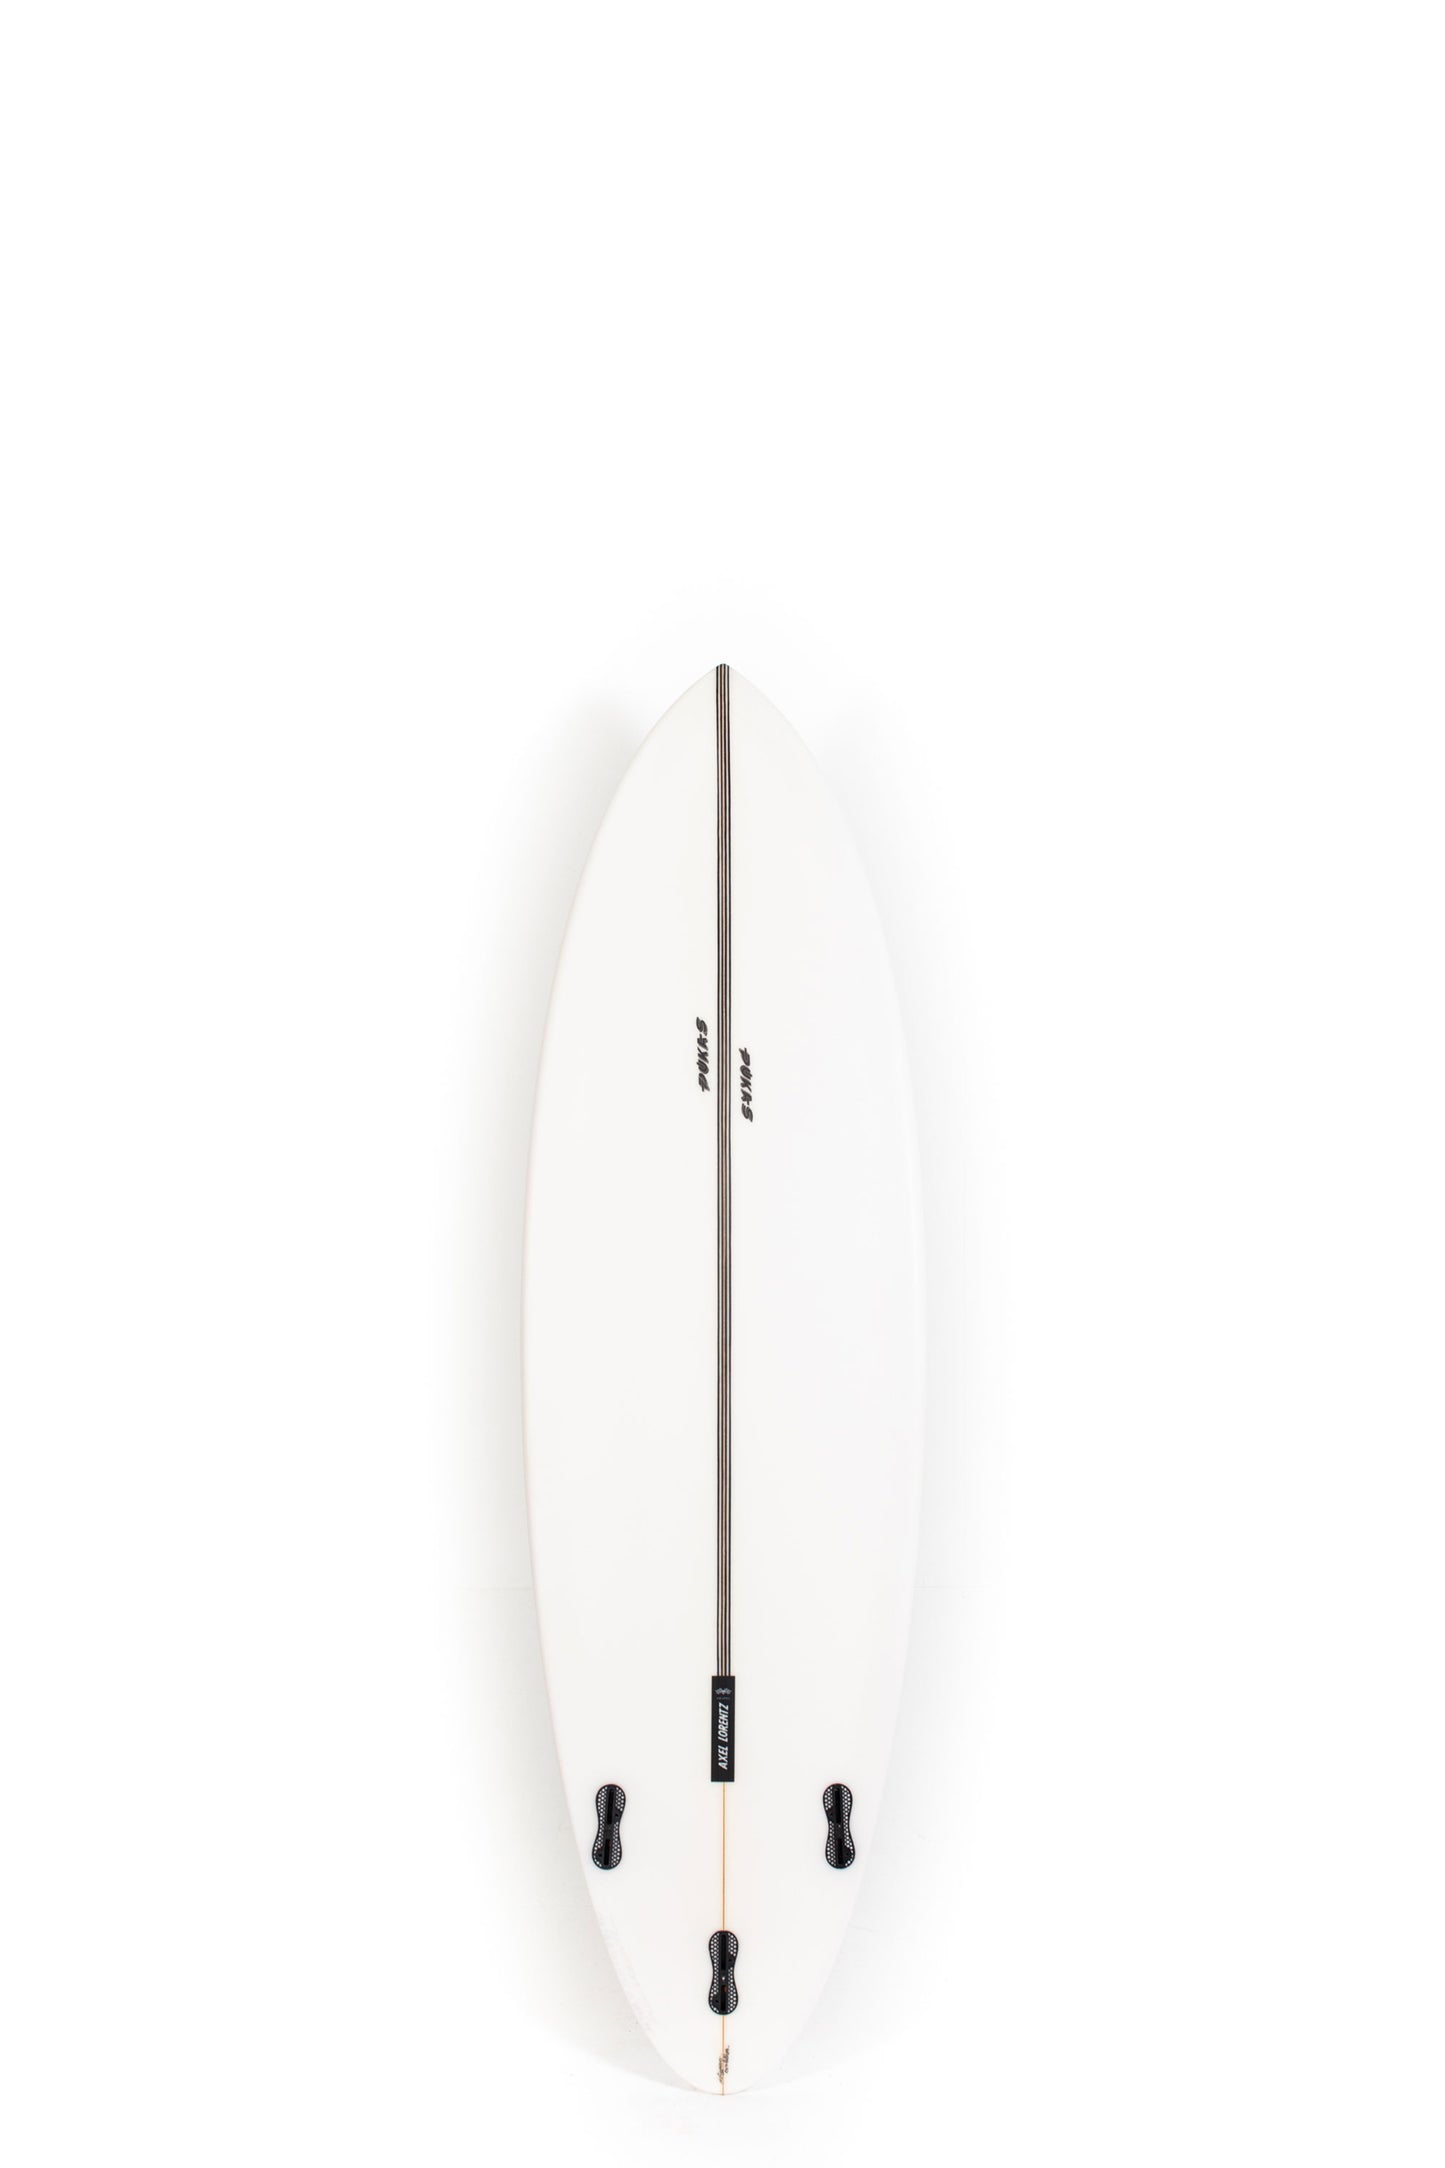 Pukas Surf Shop - Pukas Surfboard - 69ER EVOLUTION by Axel Lorentz- 6’2” x 20,75 x 2.63 - 35,72L - AX09495